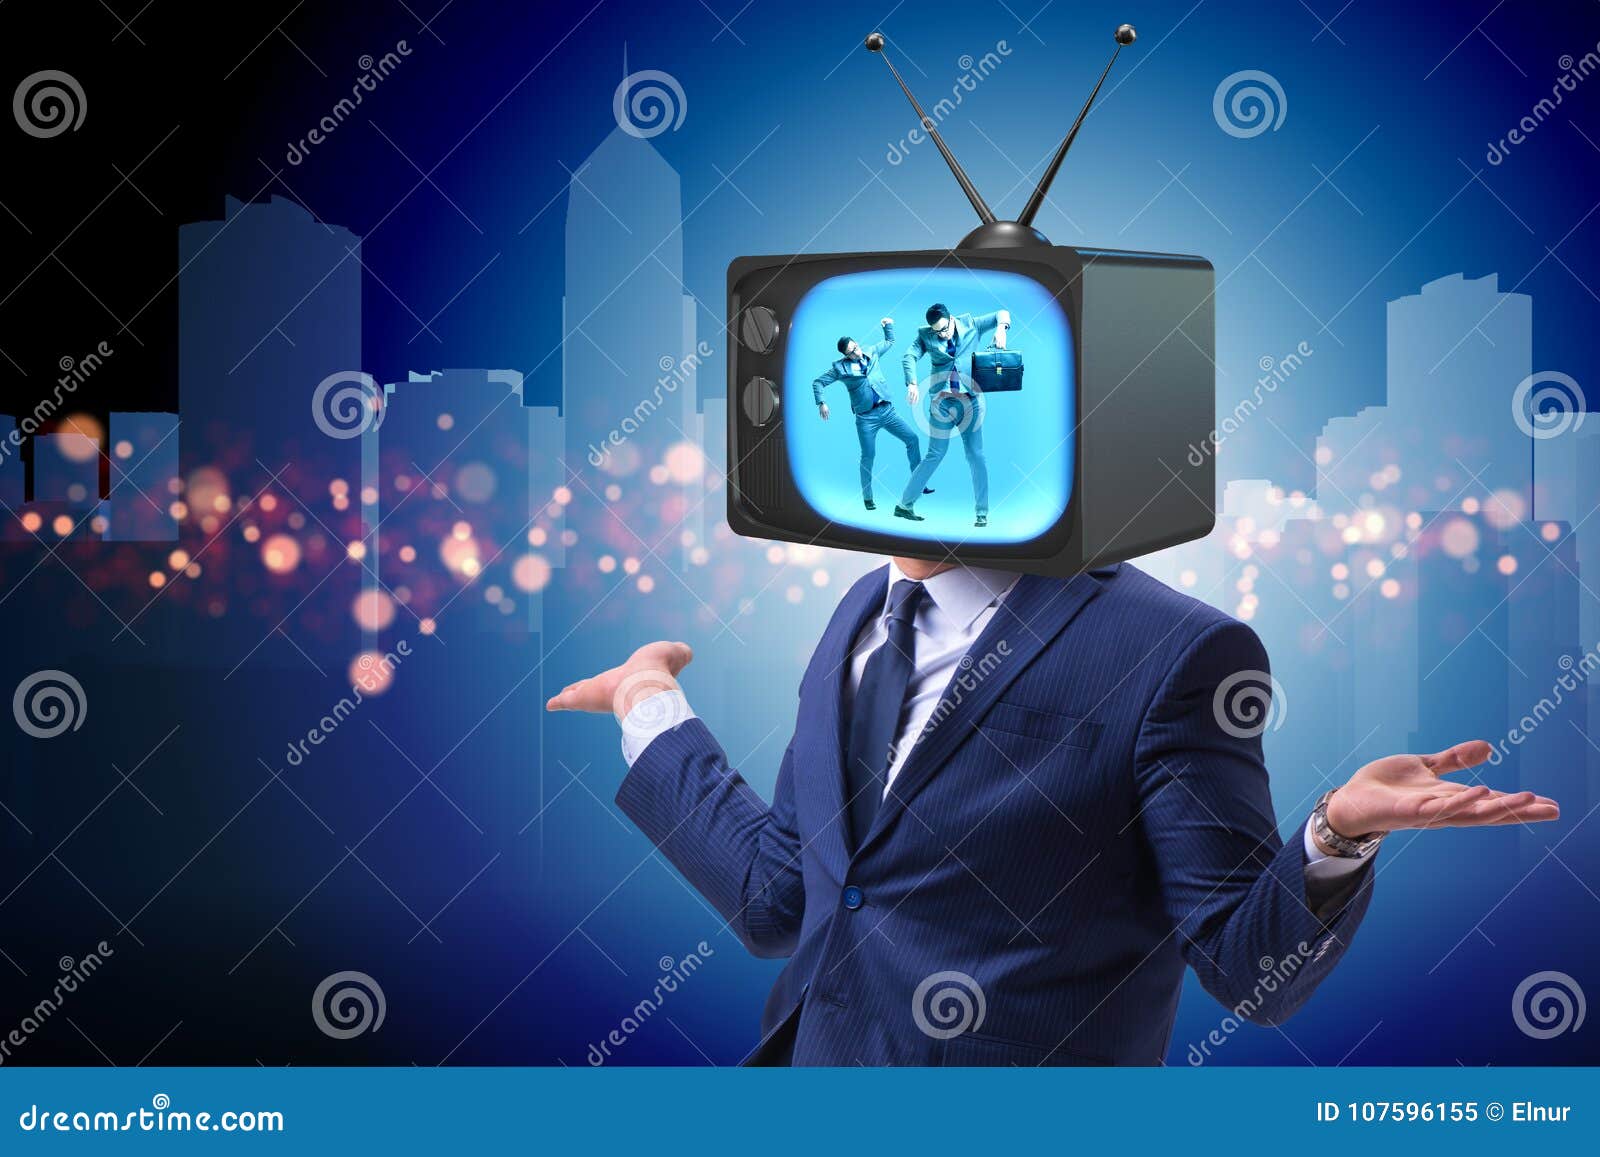 Картинка tv man. Человек телевизор. Человек рекламирующий телевизор. Телевизор мен. Реклама телевизоров с людьми.